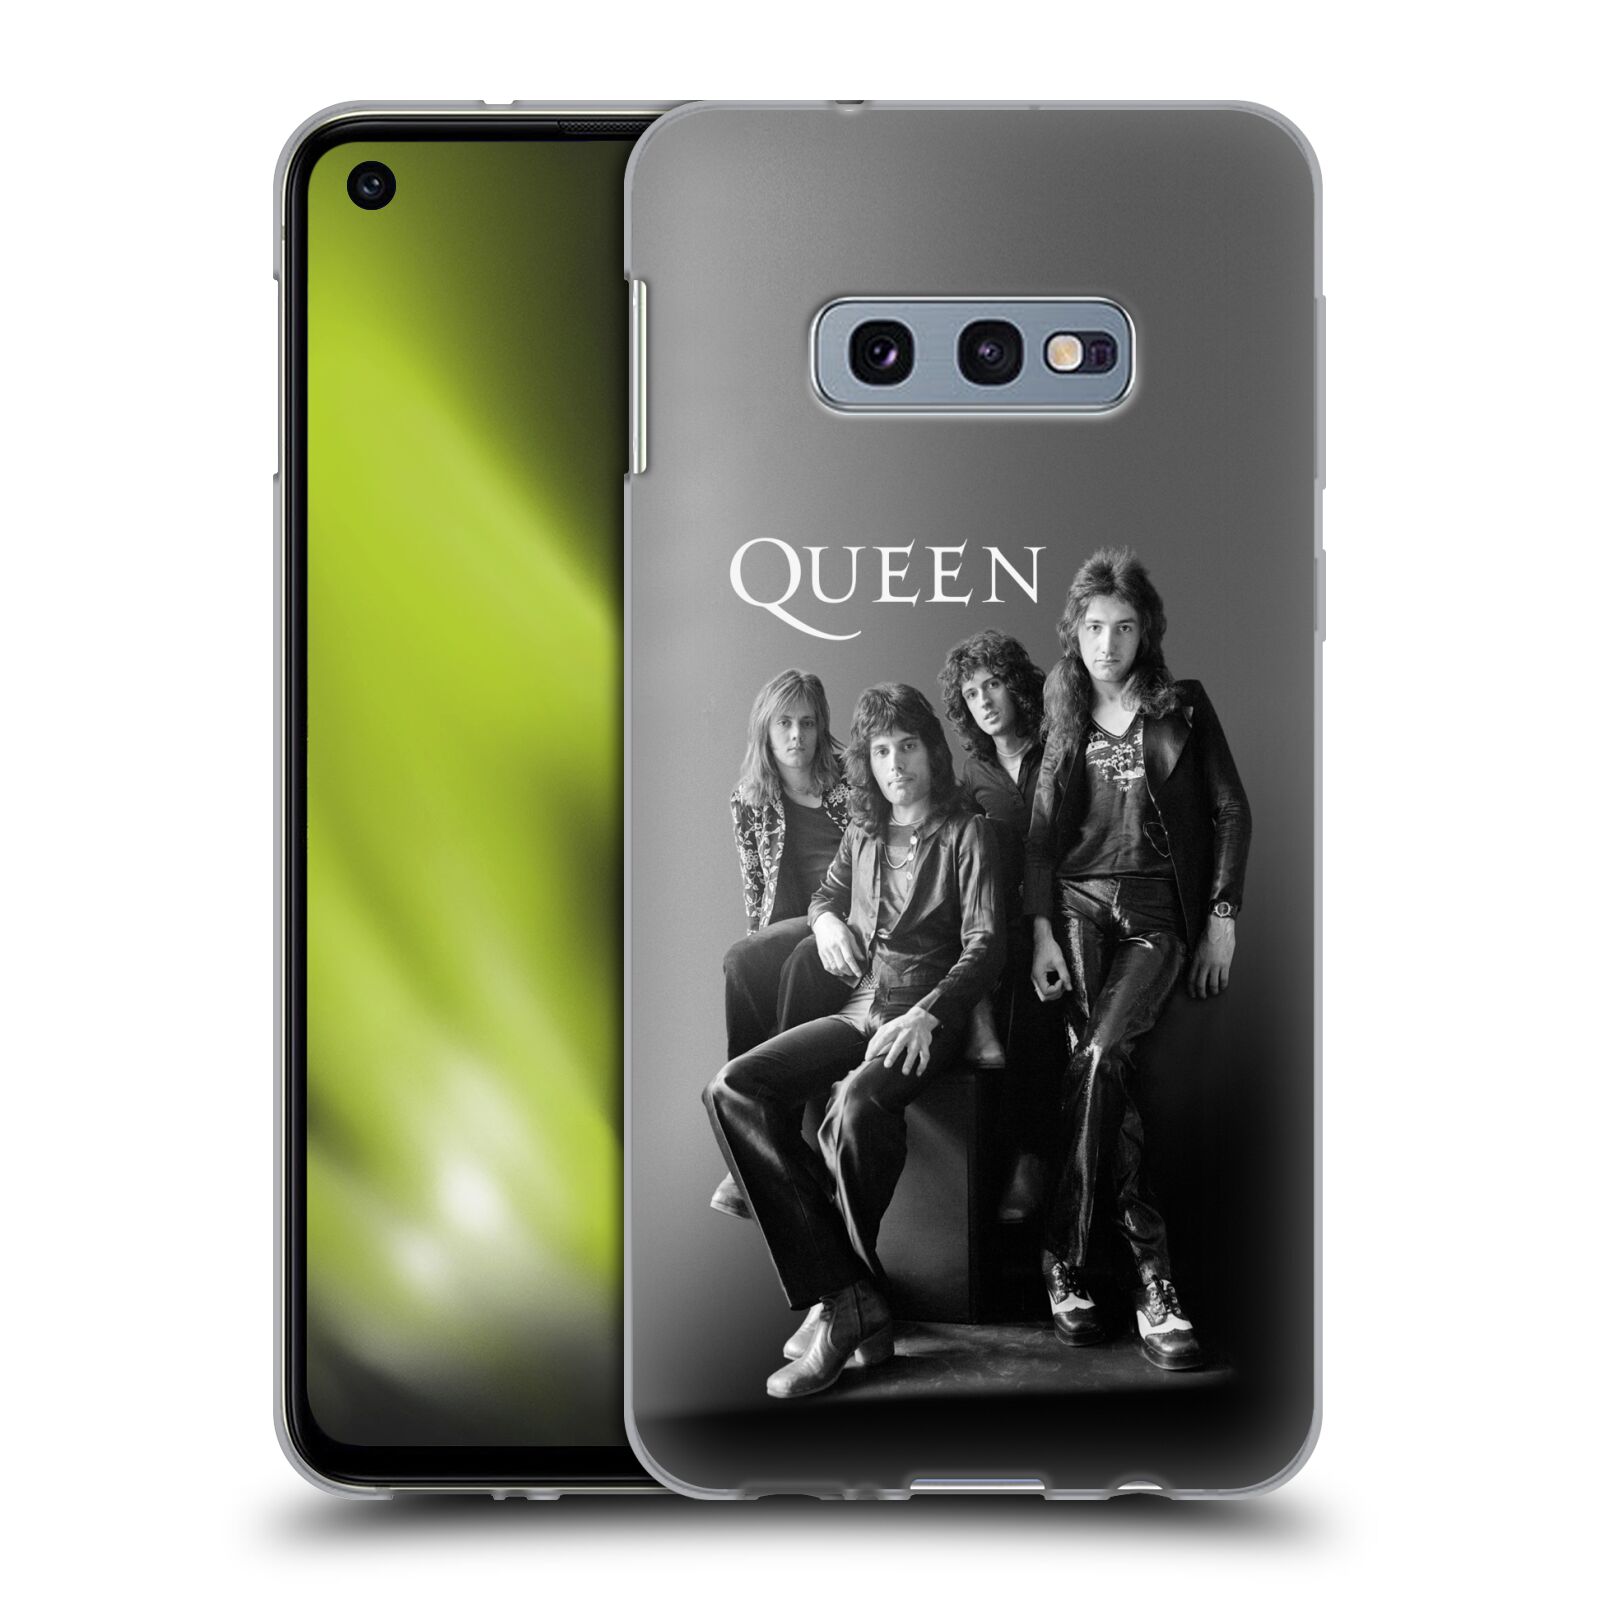 Silikonové pouzdro na mobil Samsung Galaxy S10e - Head Case - Queen - Skupina (Silikonový kryt, obal, pouzdro na mobilní telefon Samsung Galaxy S10e SM-G970 s motivem Queen - Skupina)